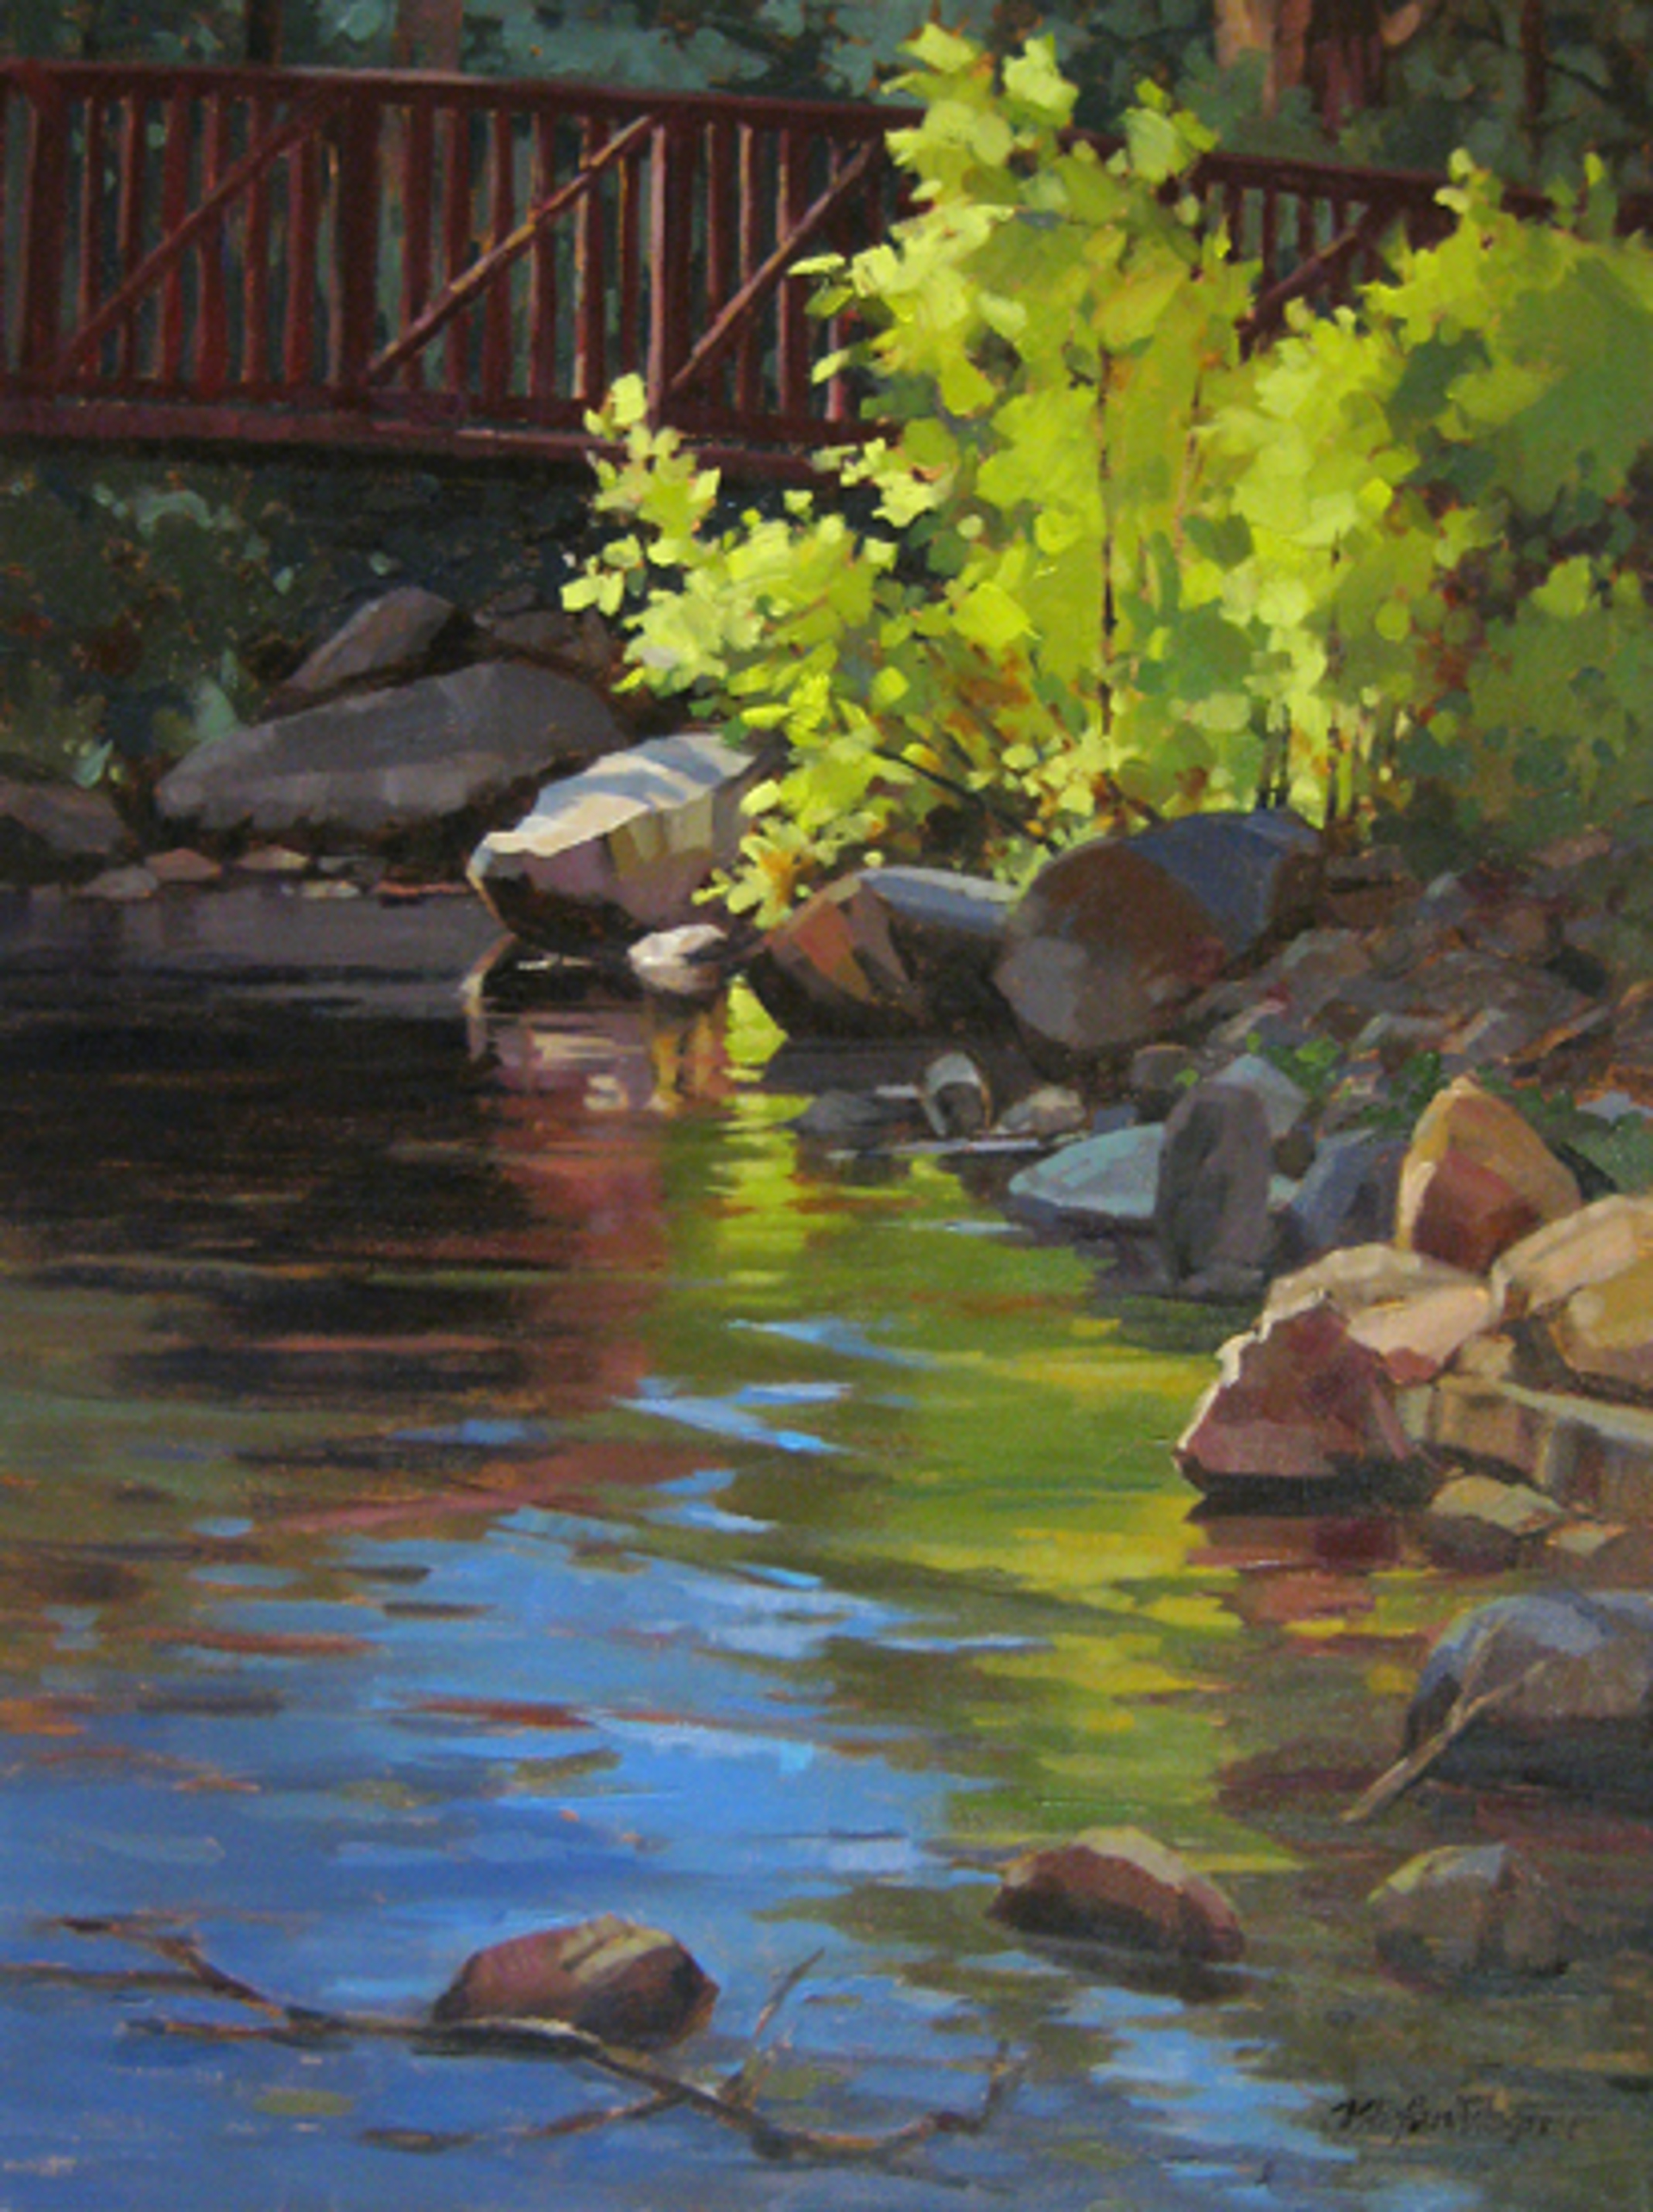 Parker Mill Creek #3 by Jill Stefani Wagner PSA-MP IAPS/MC